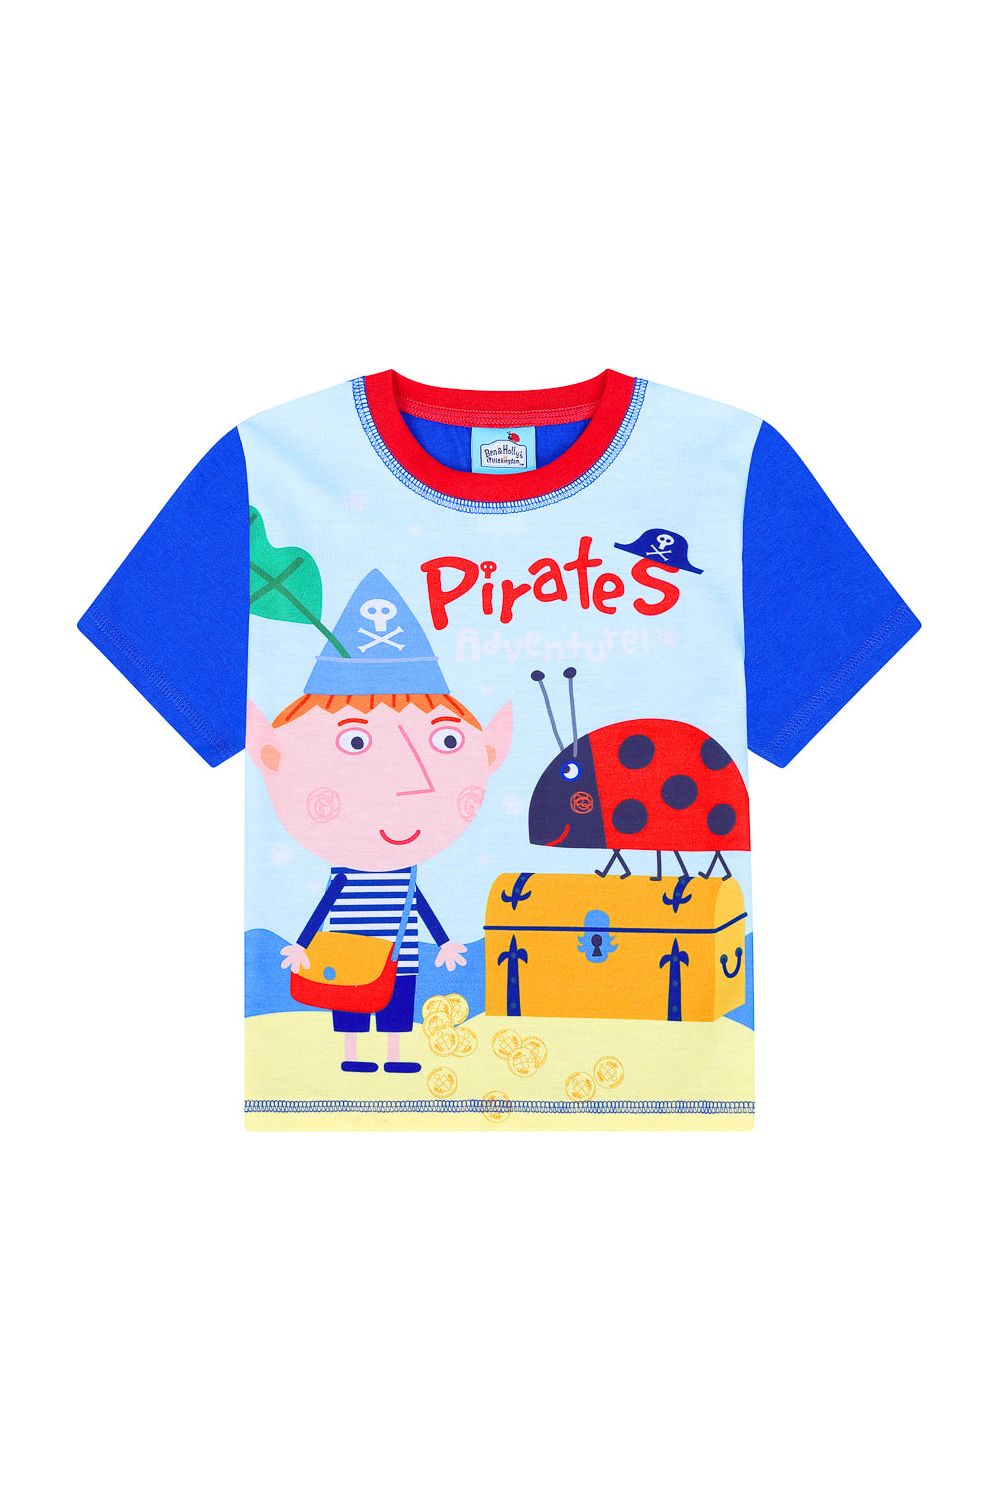 Boy's Ben & Holly Little Kingdom Pirates Adventure Short Pyjamas - Pyjamas.com